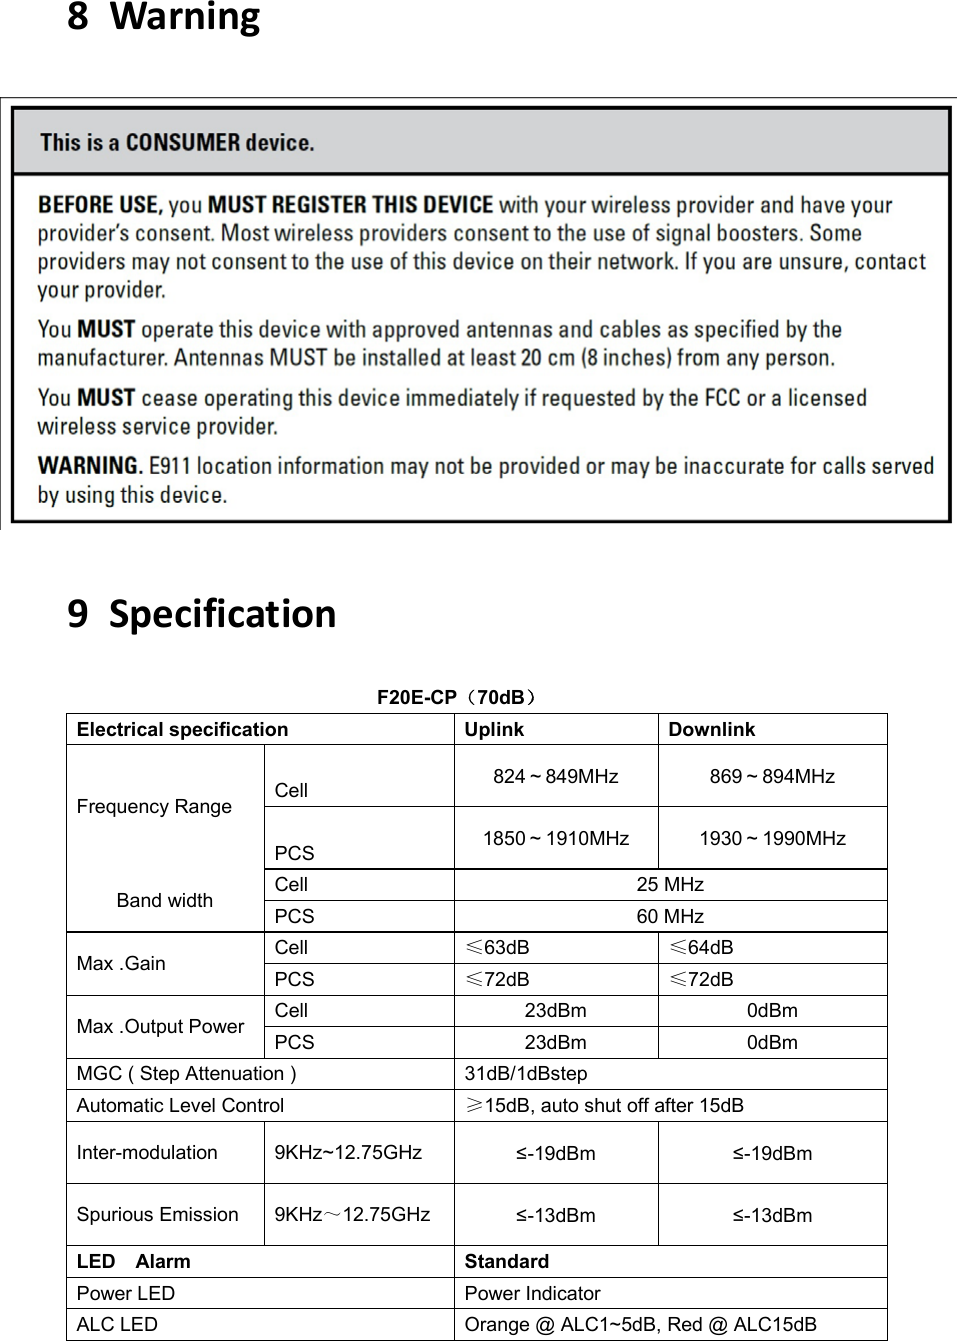 8 Warning9 SpecificationF20E-CP（70dB） Electrical specification      Uplink  Downlink Frequency Range  Cell  824～849MHz  869～894MHz PCS  1850～1910MHz  1930～1990MHz Band width  Cell  25 MHz PCS  60 MHz Max .Gain  Cell  ≤63dB  ≤64dB PCS  ≤72dB  ≤72dB Max .Output Power  Cell  23dBm  0dBm PCS  23dBm  0dBm MGC ( Step Attenuation )  31dB/1dBstep Automatic Level Control                   ≥15dB, auto shut off after 15dB  Inter-modulation  9KHz~12.75GHz  ≤-19dBm  ≤-19dBm Spurious Emission  9KHz～12.75GHz  ≤-13dBm  ≤-13dBm LED    Alarm  Standard Power LED  Power Indicator ALC LED    Orange @ ALC1~5dB, Red @ ALC15dB 